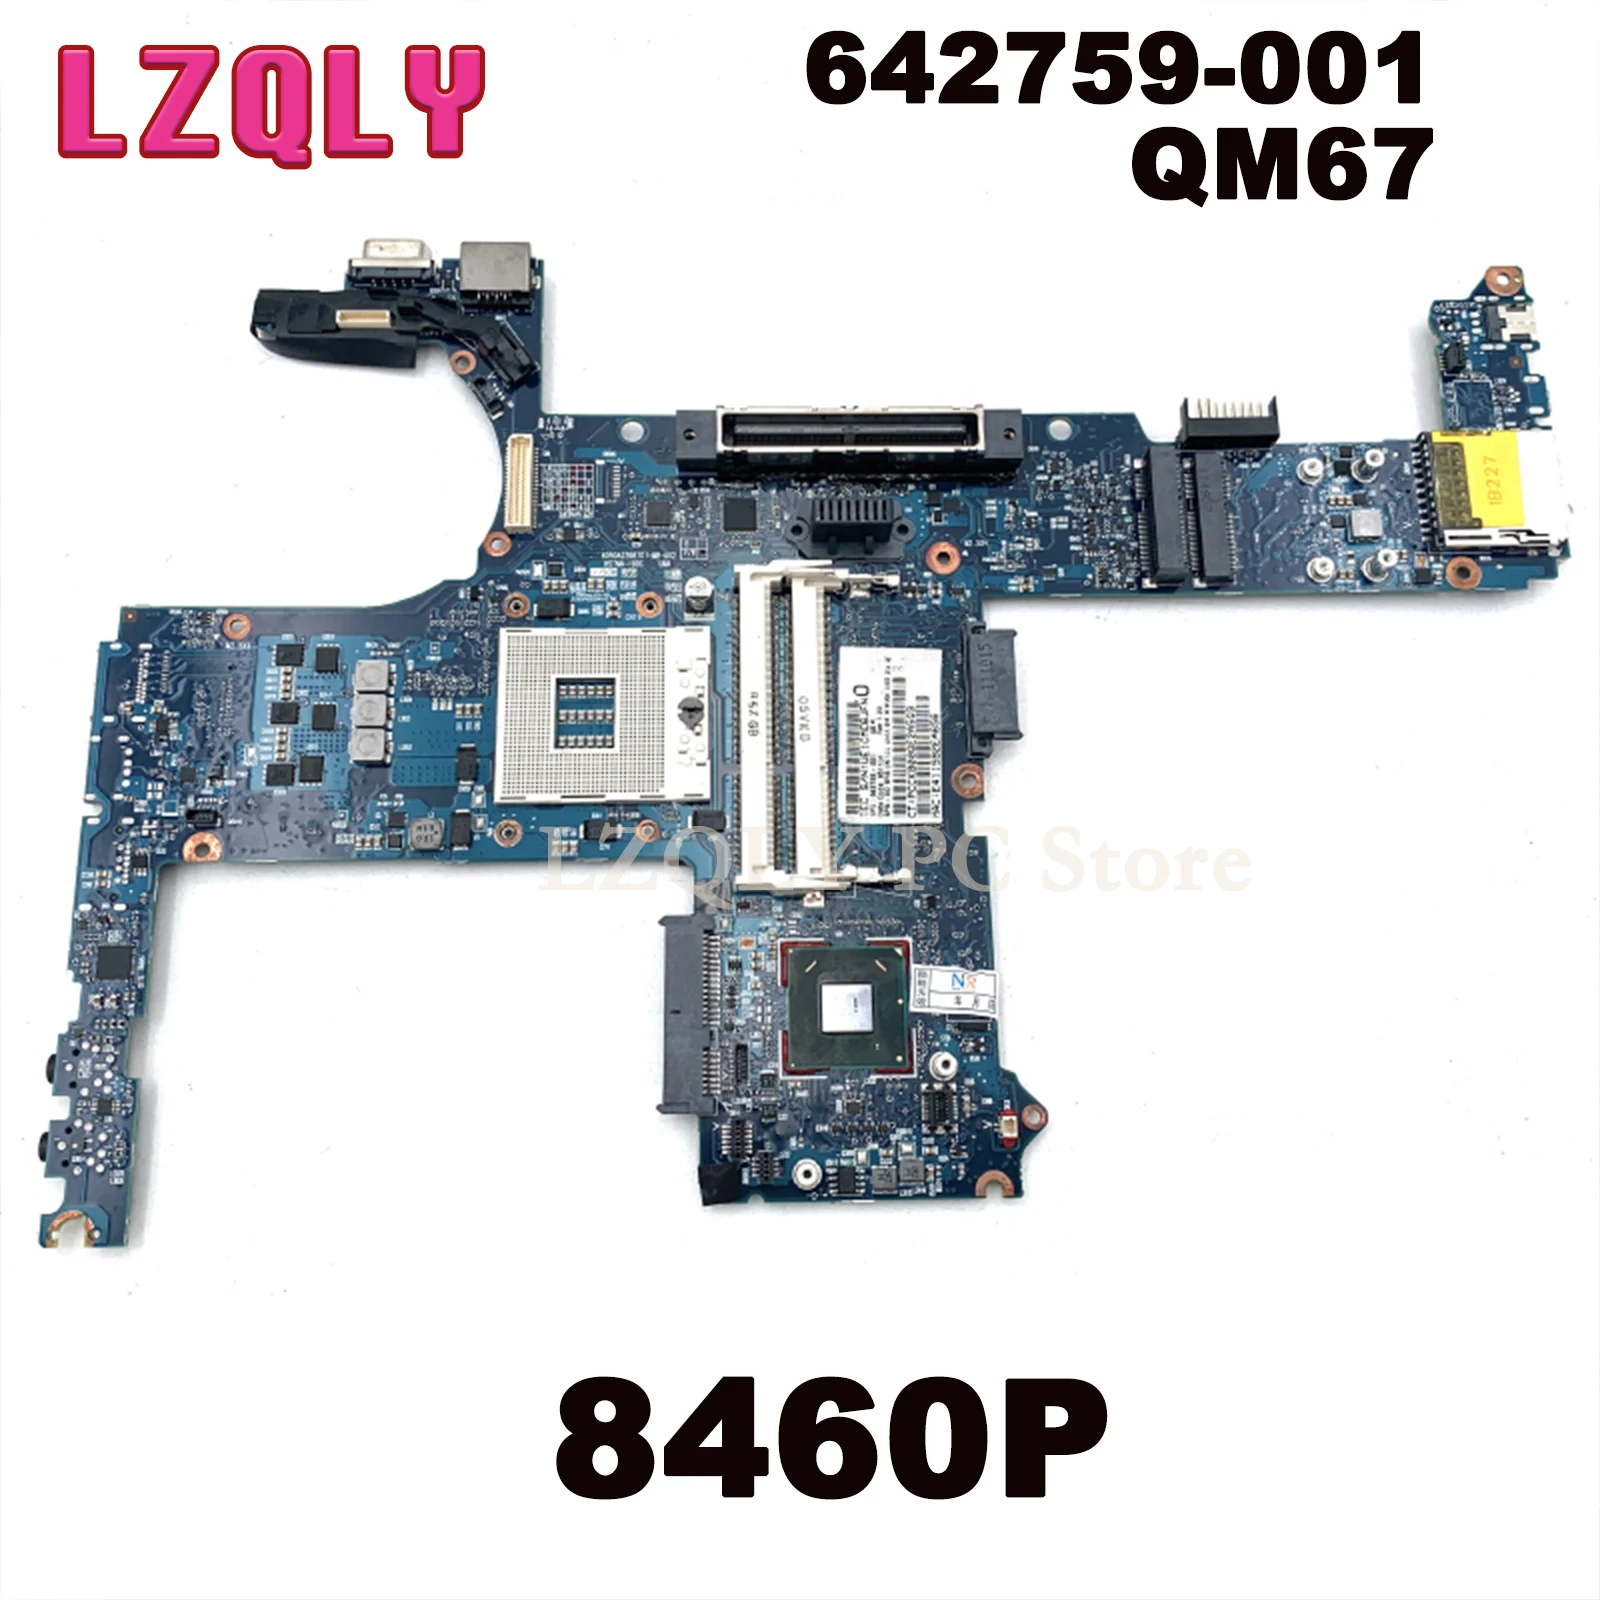 LZQLY 642759-001 for HP EliteBook 8460P laptop motherboard QM67 chipset DDR3 main board full test